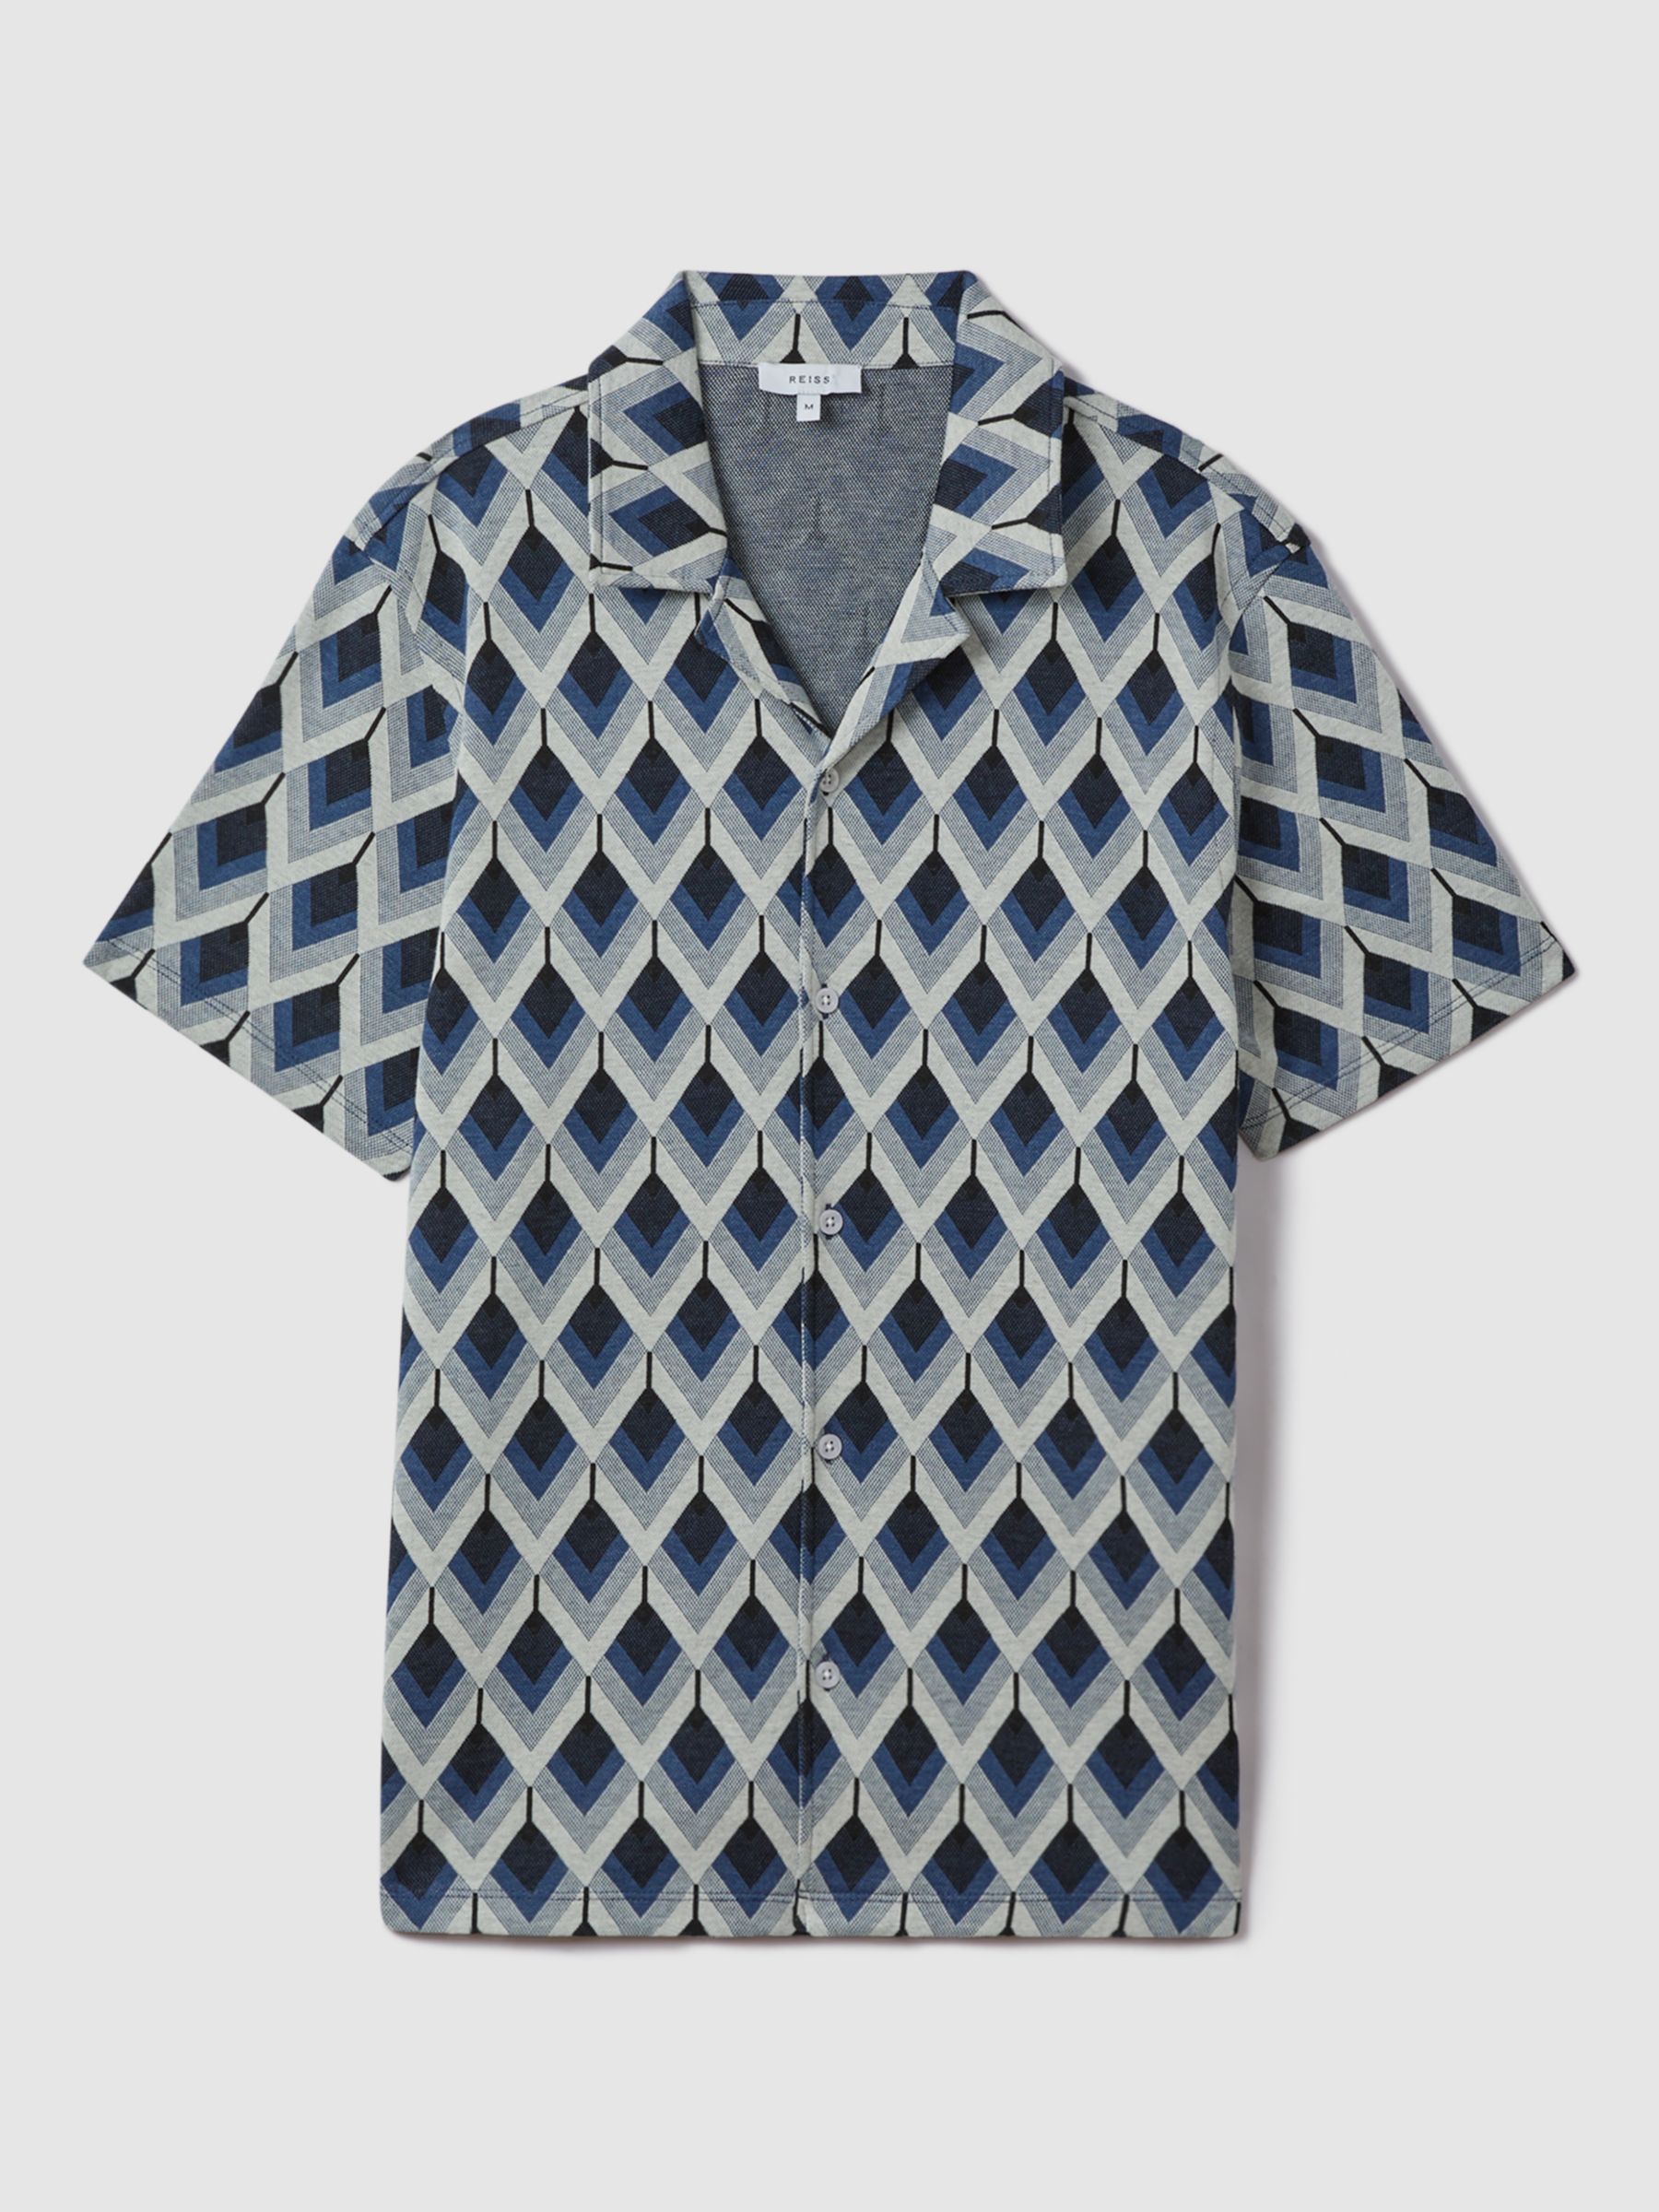 Reiss Beech Geometric Print Shirt, Navy/Multi, XS